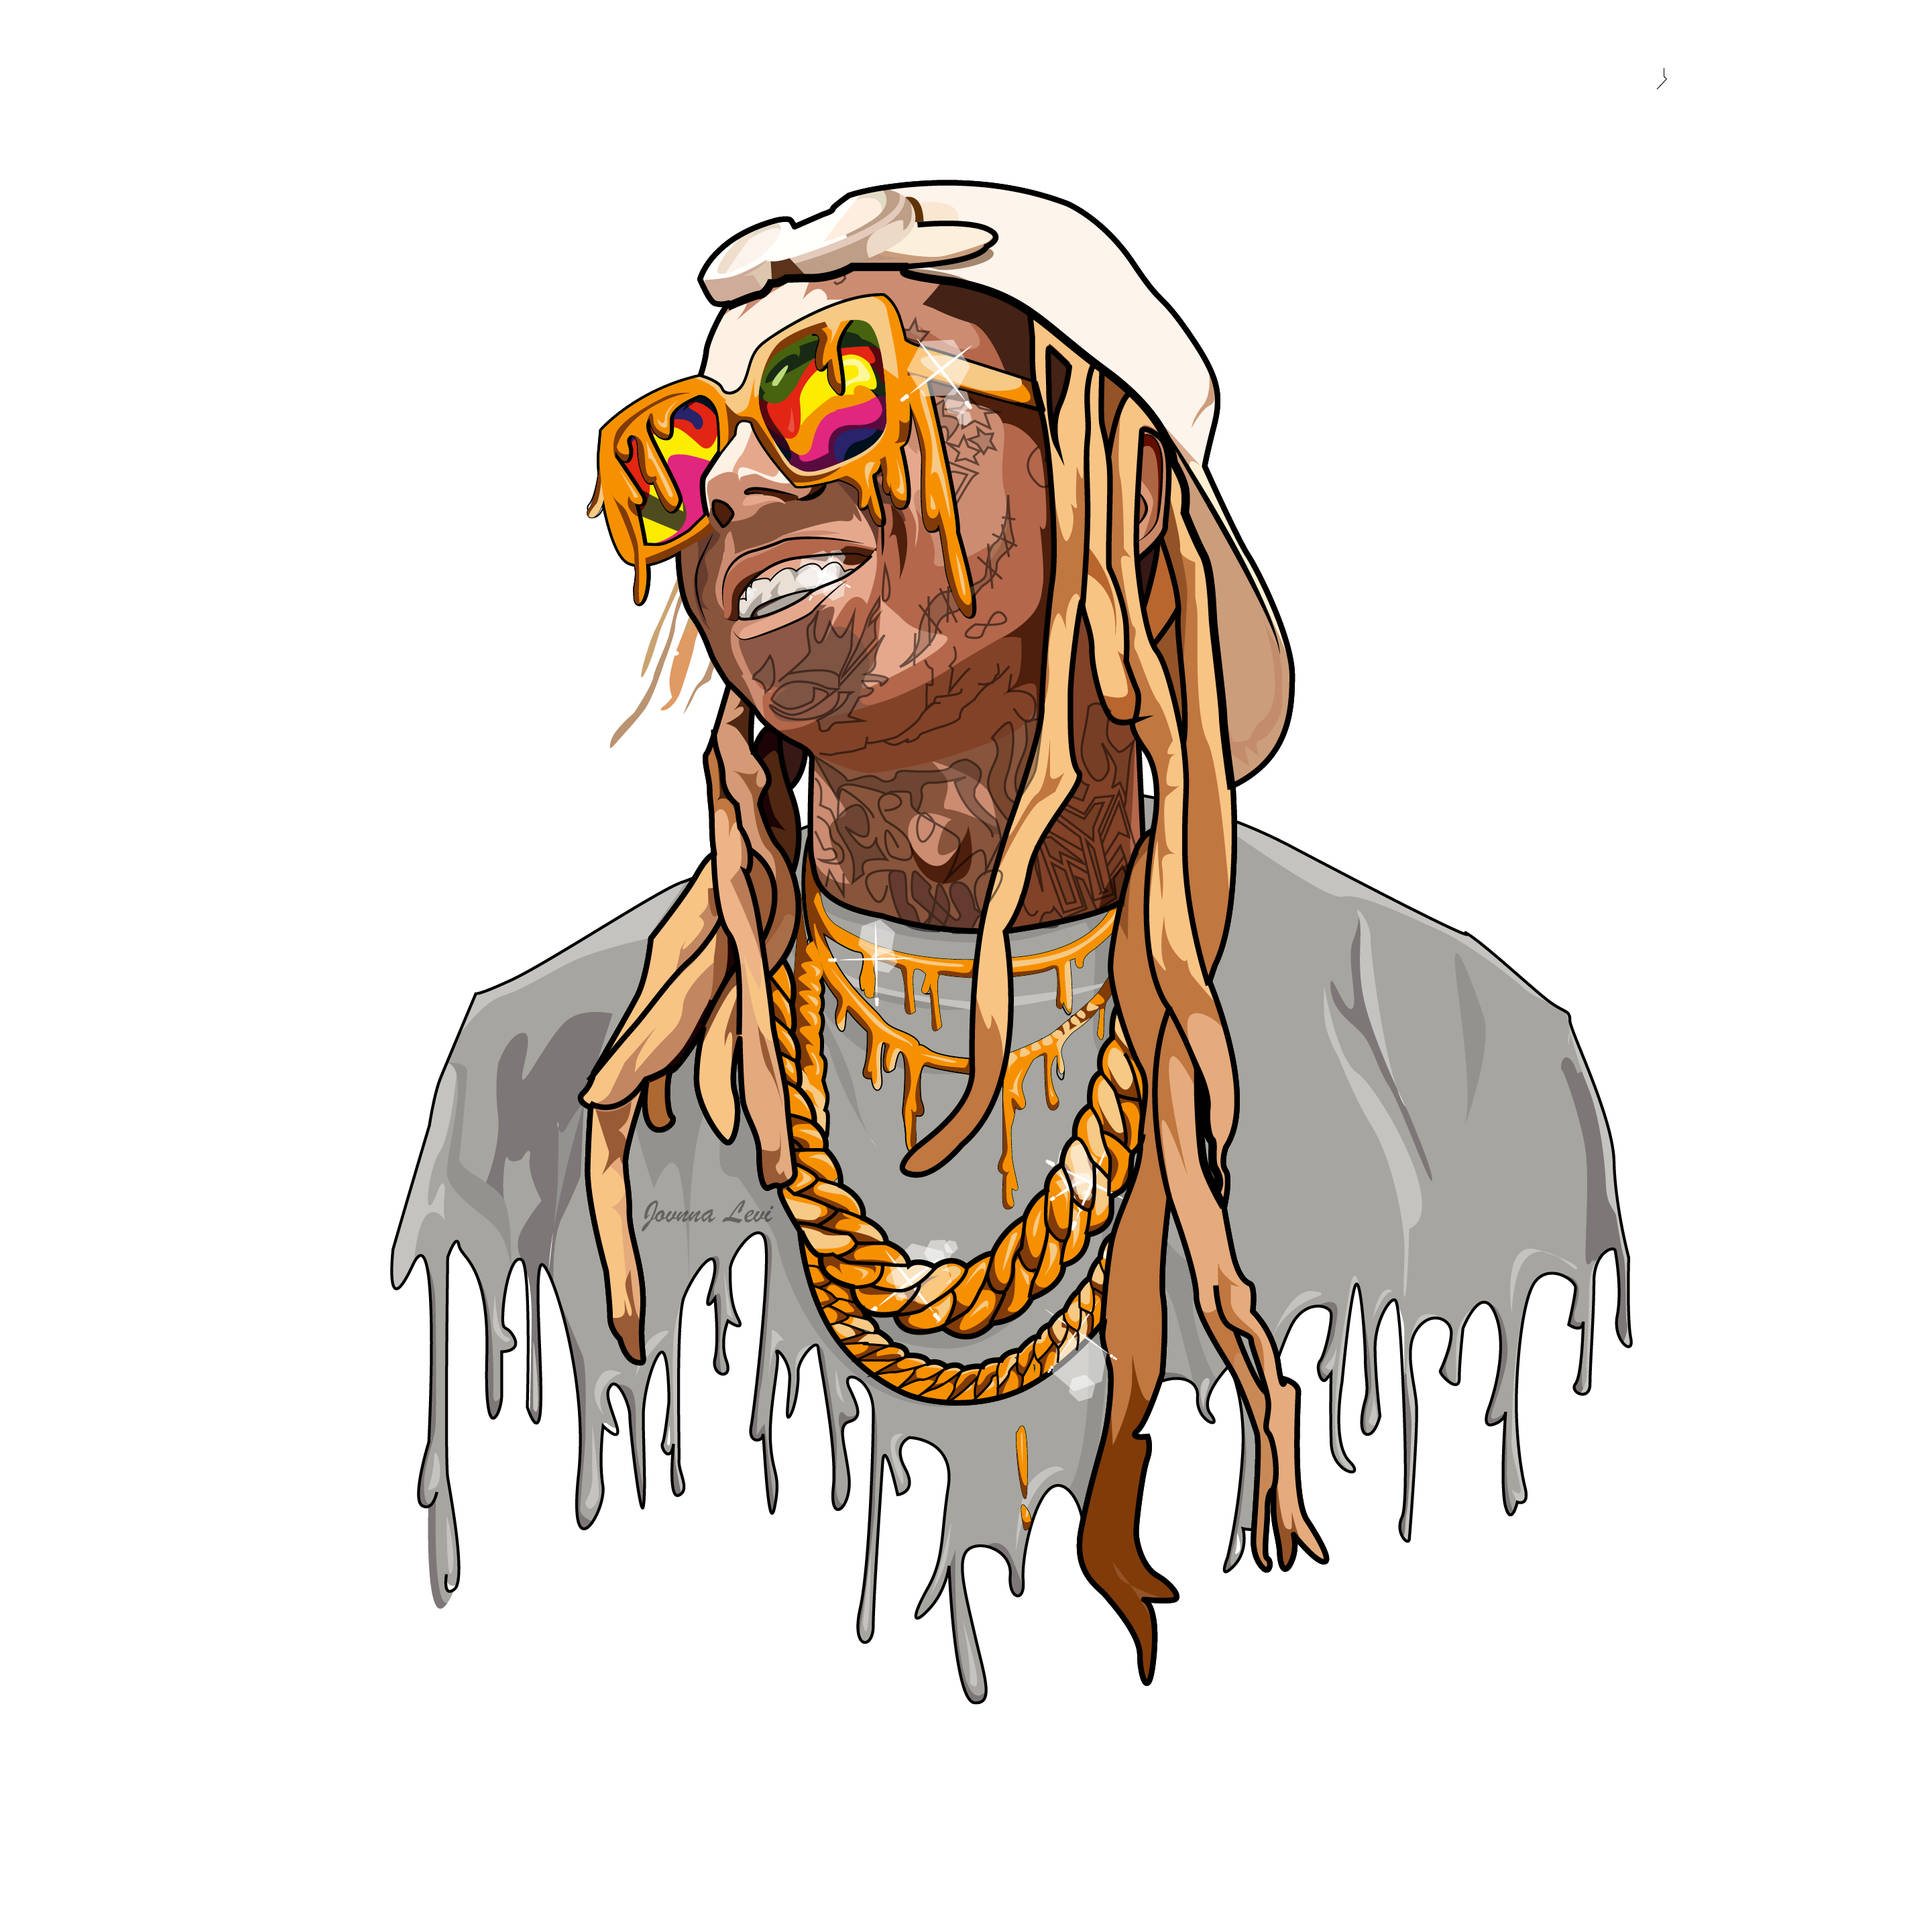 Lil Wayne Digital Art